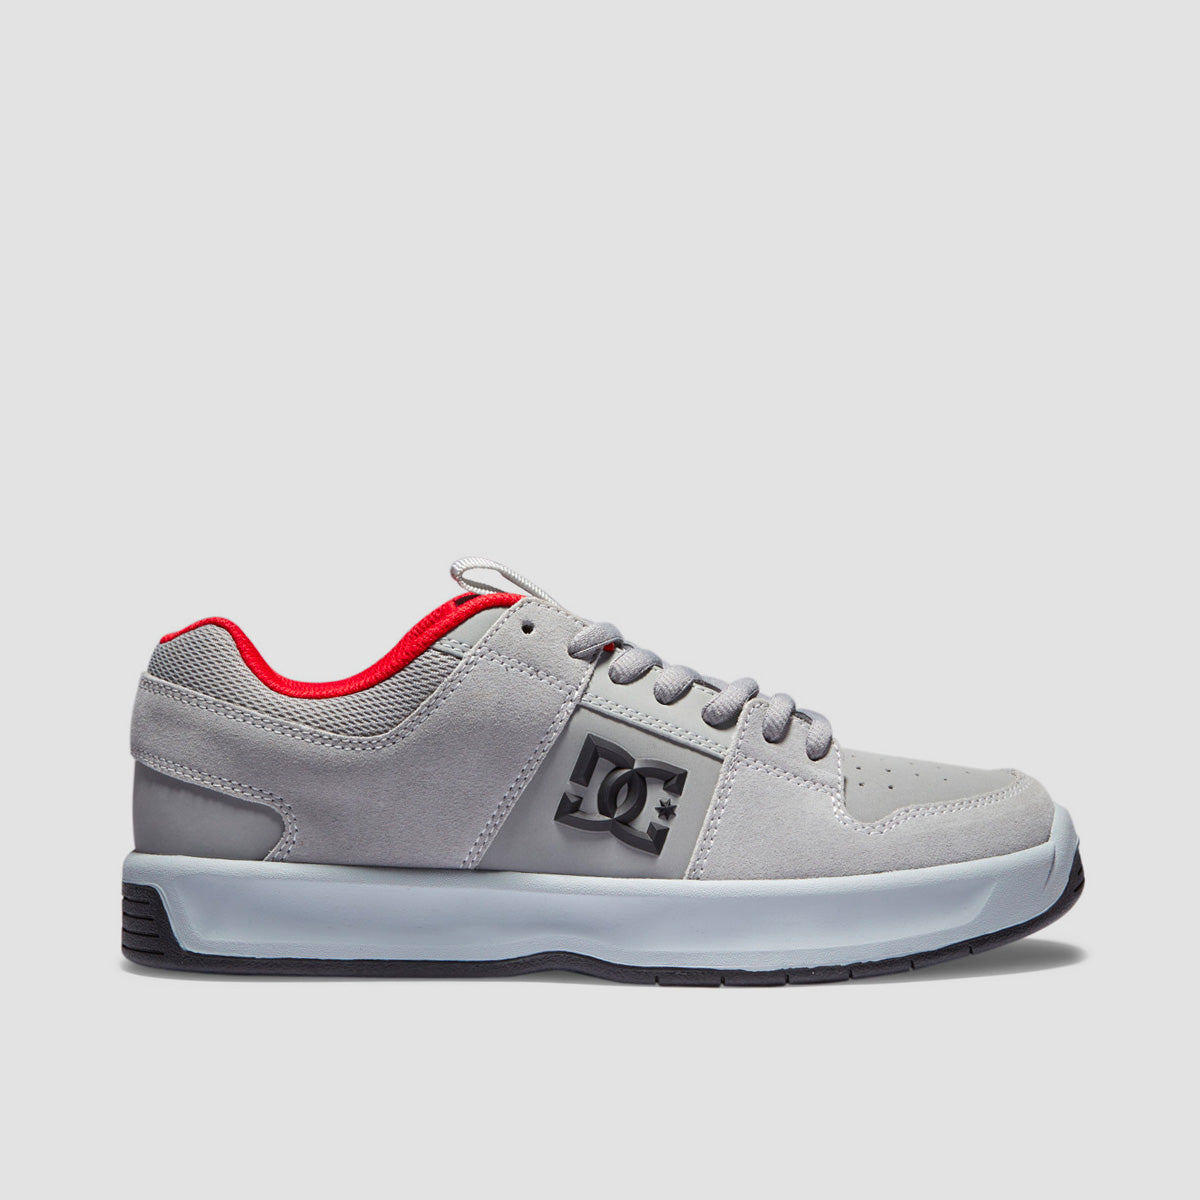 DC Lynx Zero S Shoes - Grey/Grey/Red